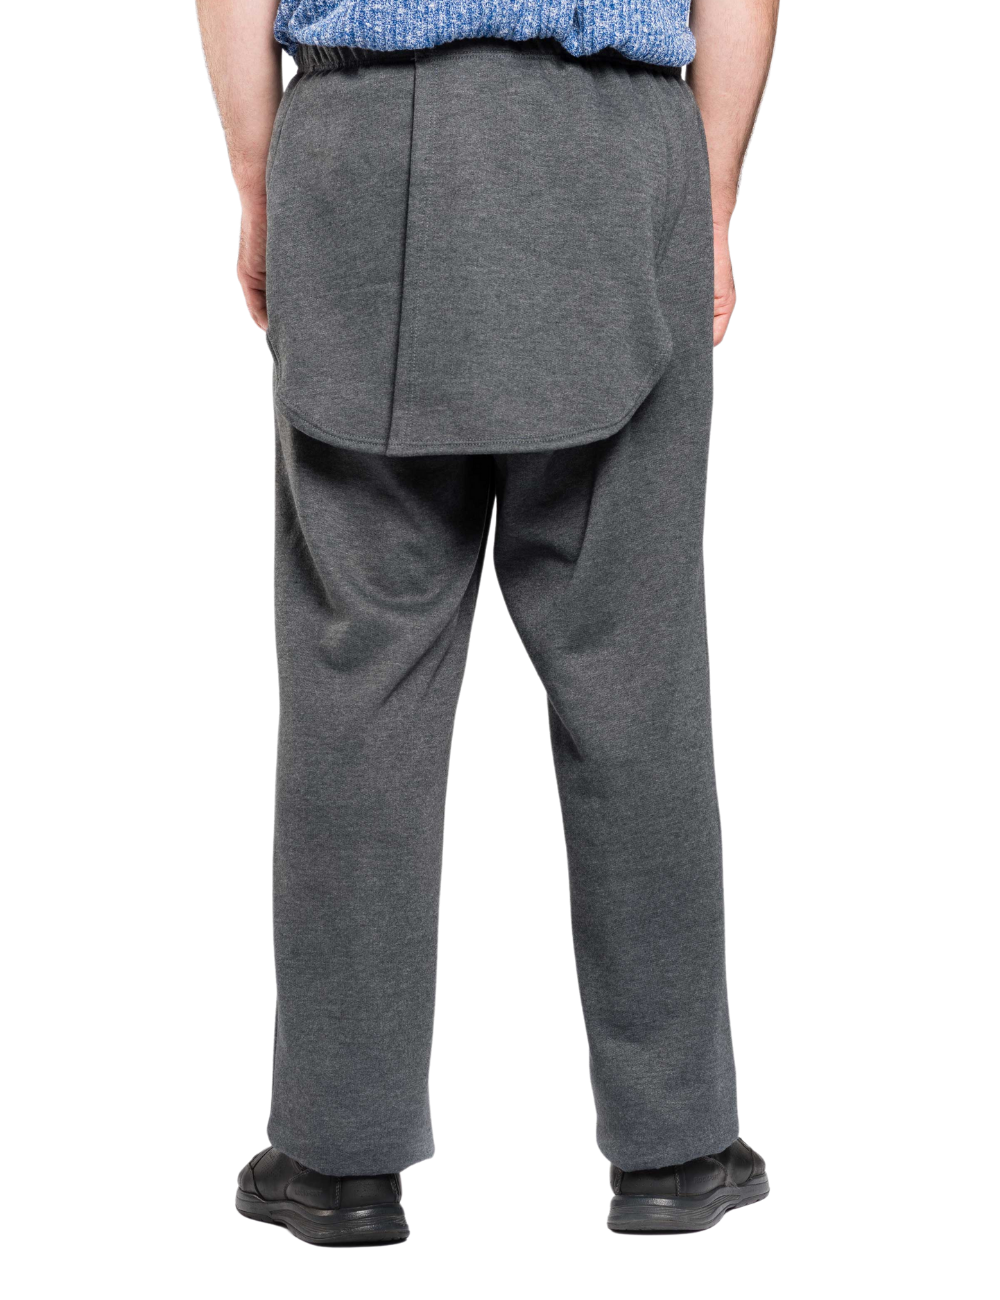 Denim Capri Pants Adaptive Clothing for Seniors, Disabled